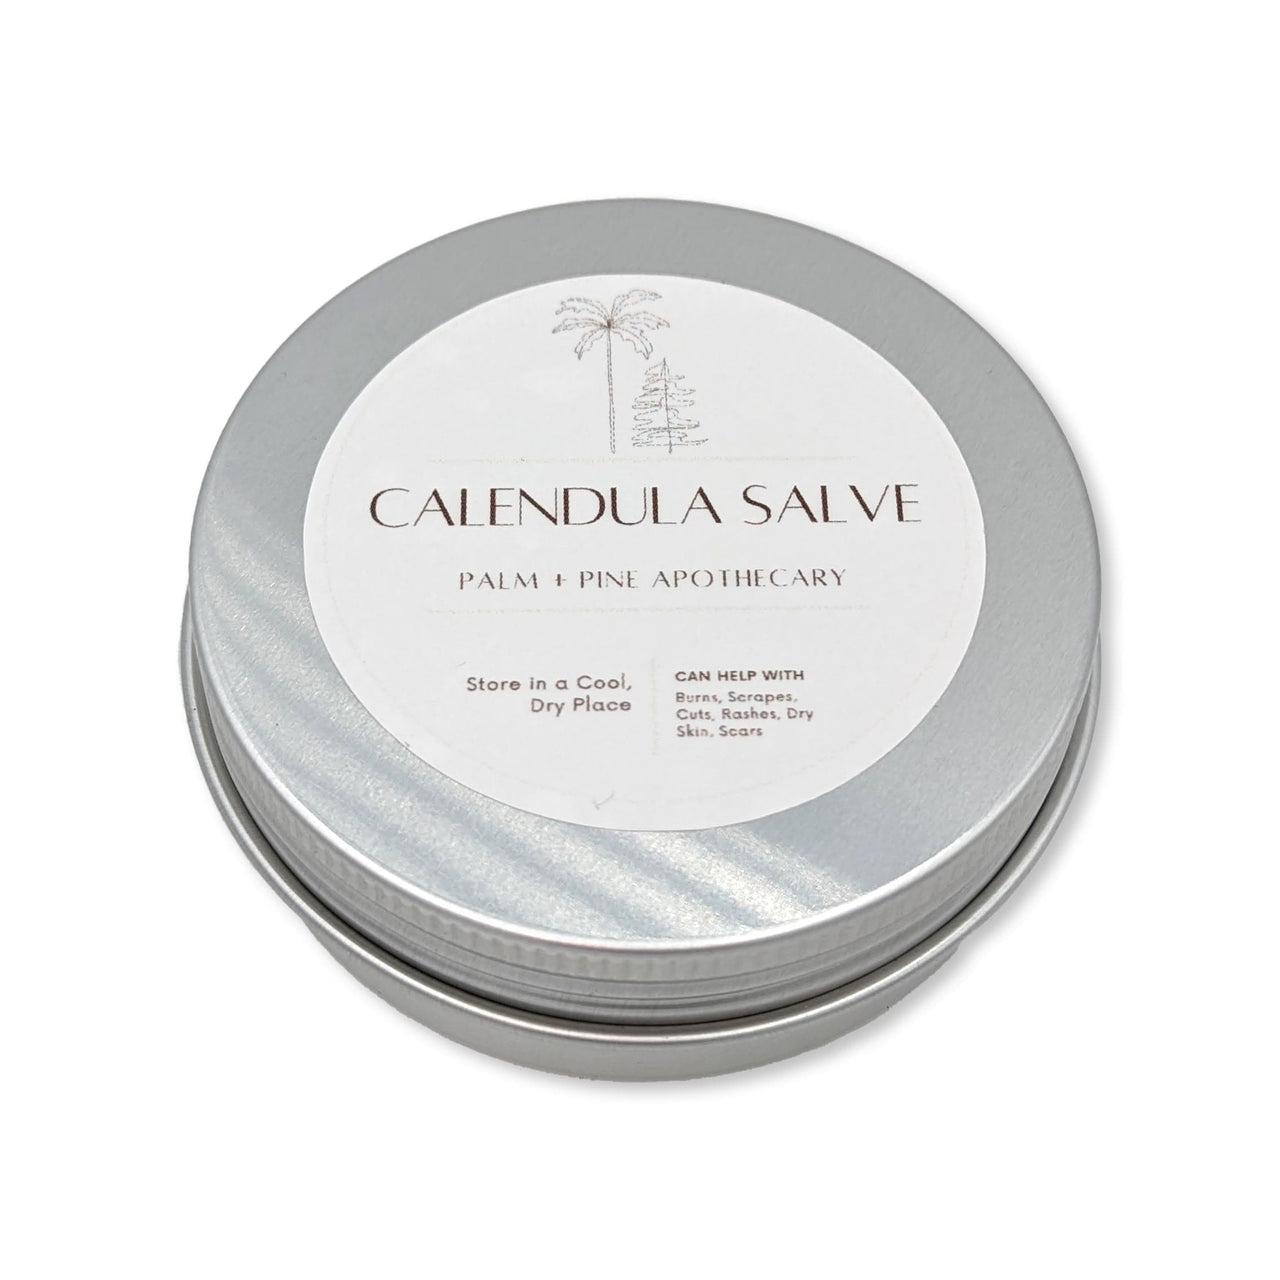 Calendula Salve - Organic Burn, Cuts, Scar Care - 1.5 oz Palm & Pine Apothecary Salve - Conners Clinic